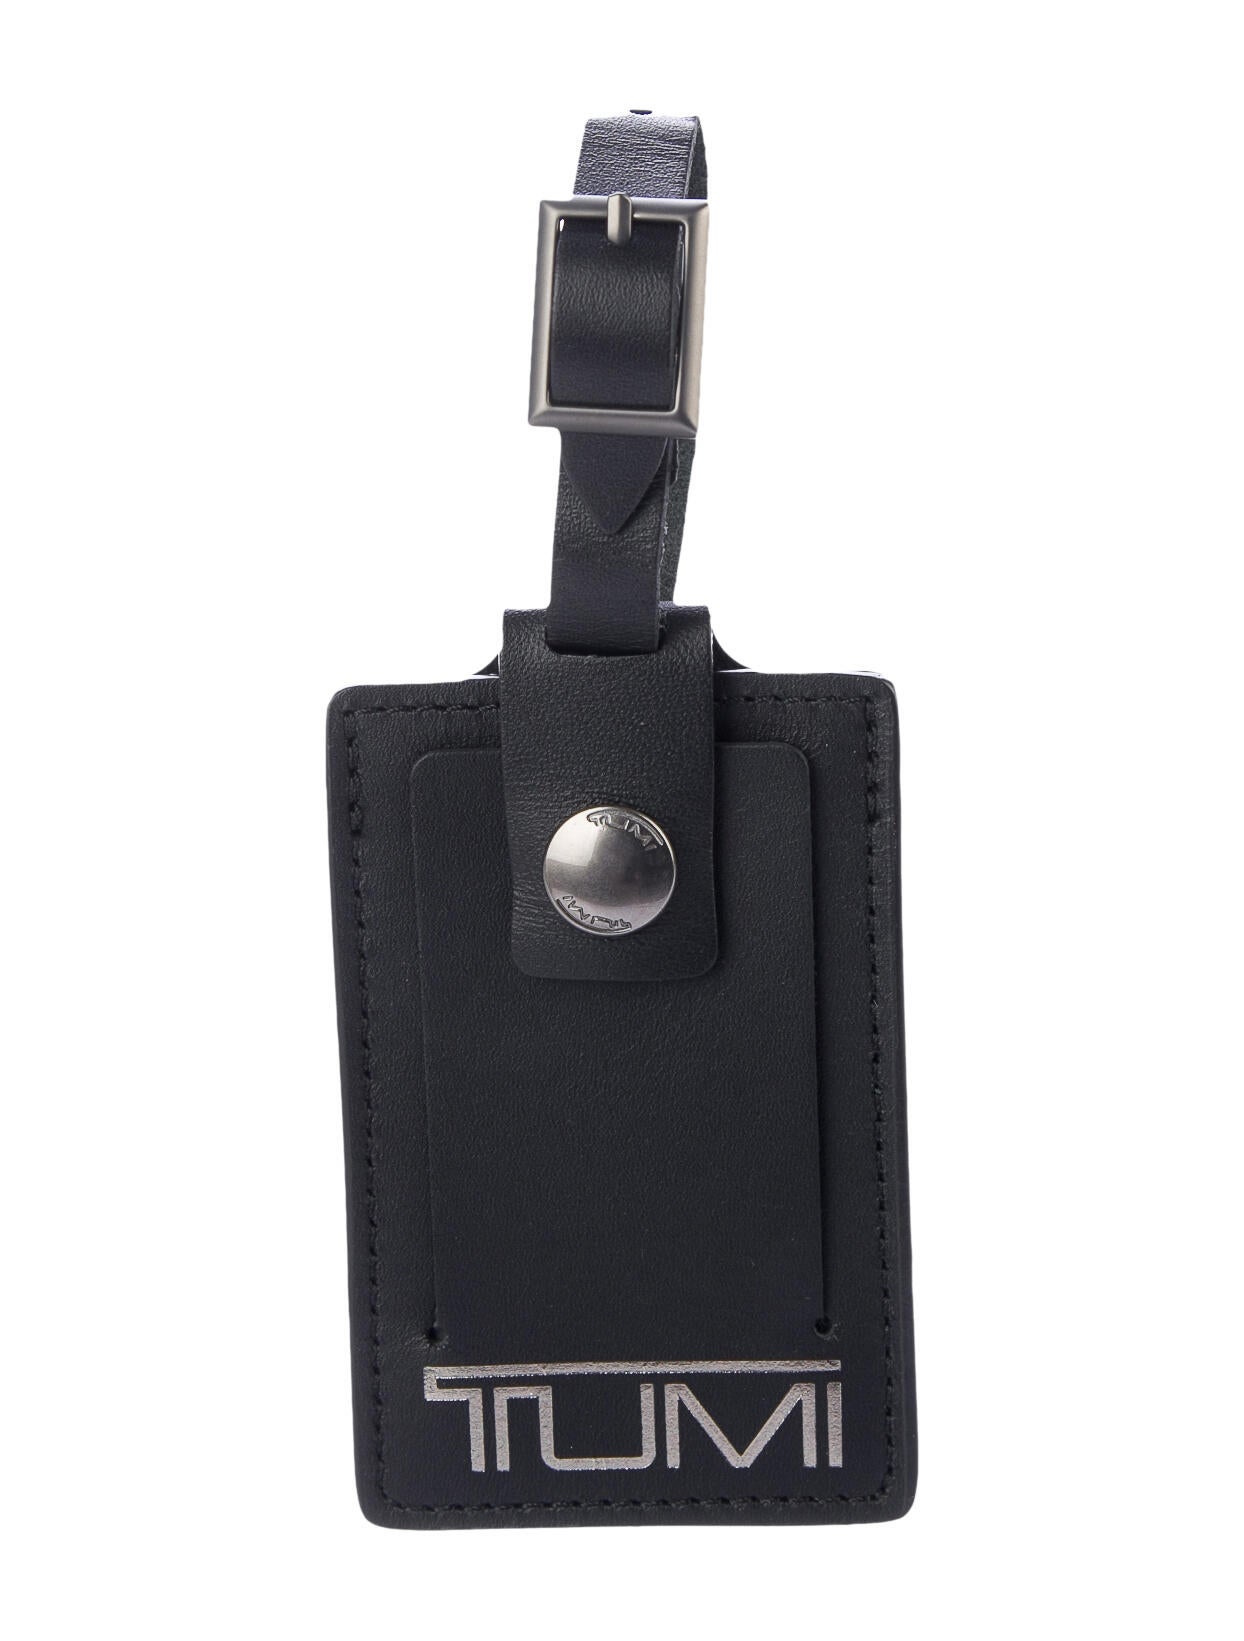 Tumi Leather Luggage Tag - Accessories - TMI31290 | The RealReal